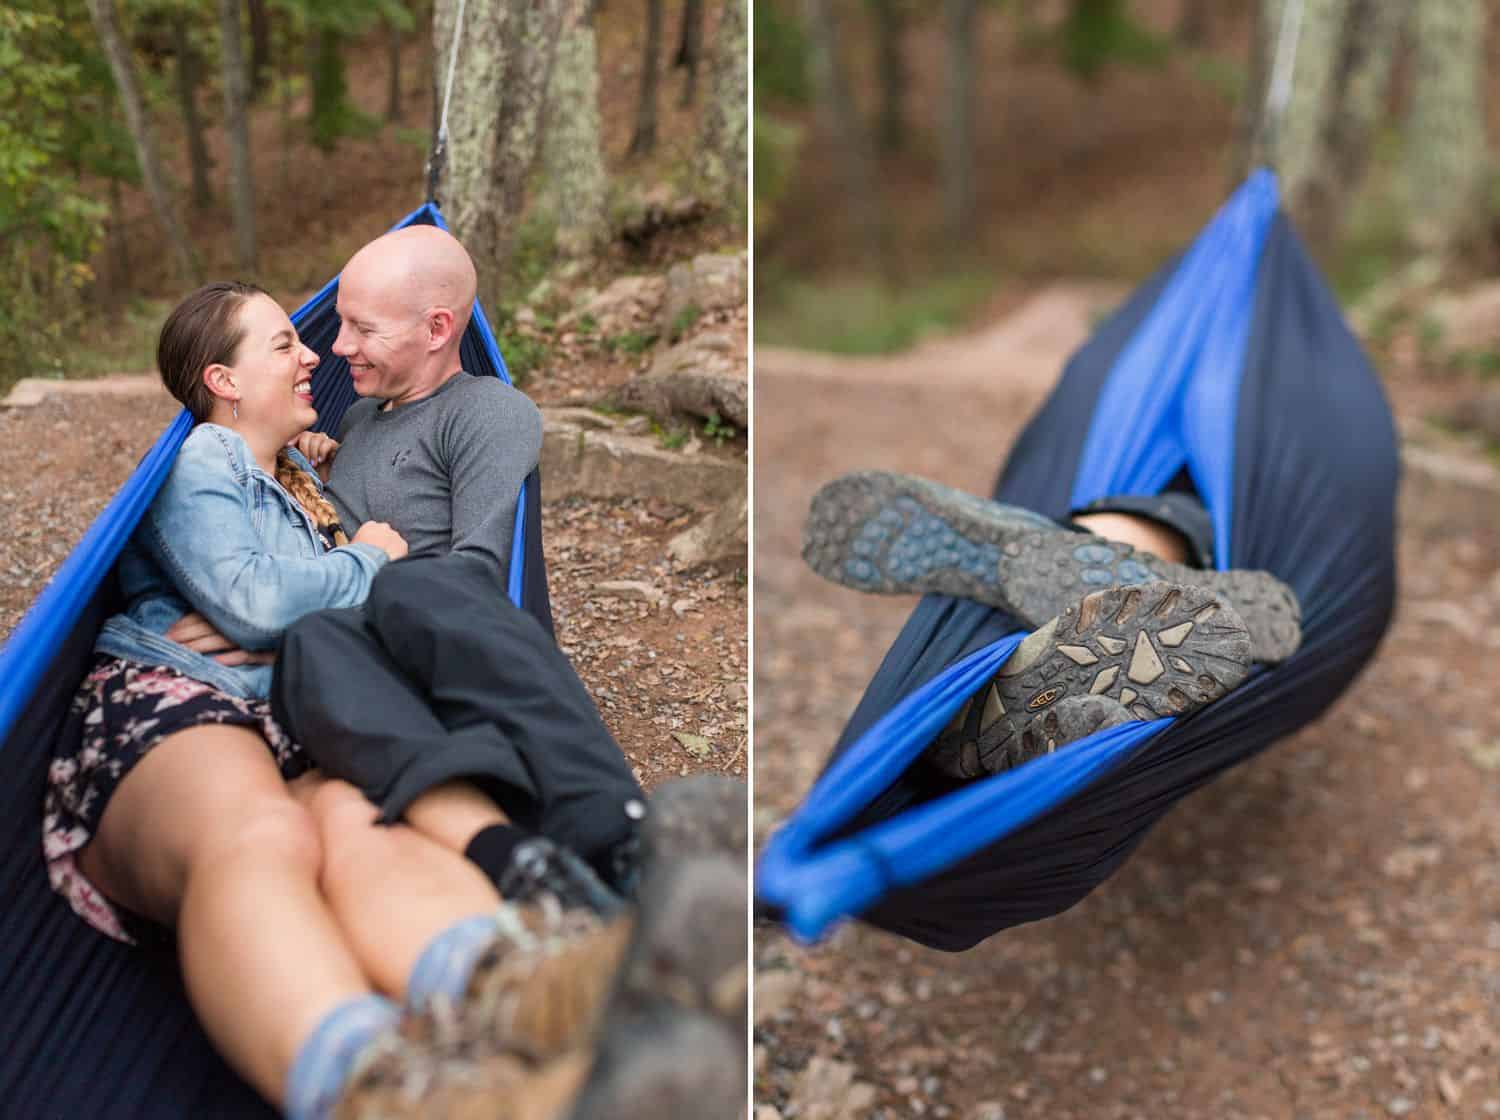 Photos of a couple cuddling in a hammock